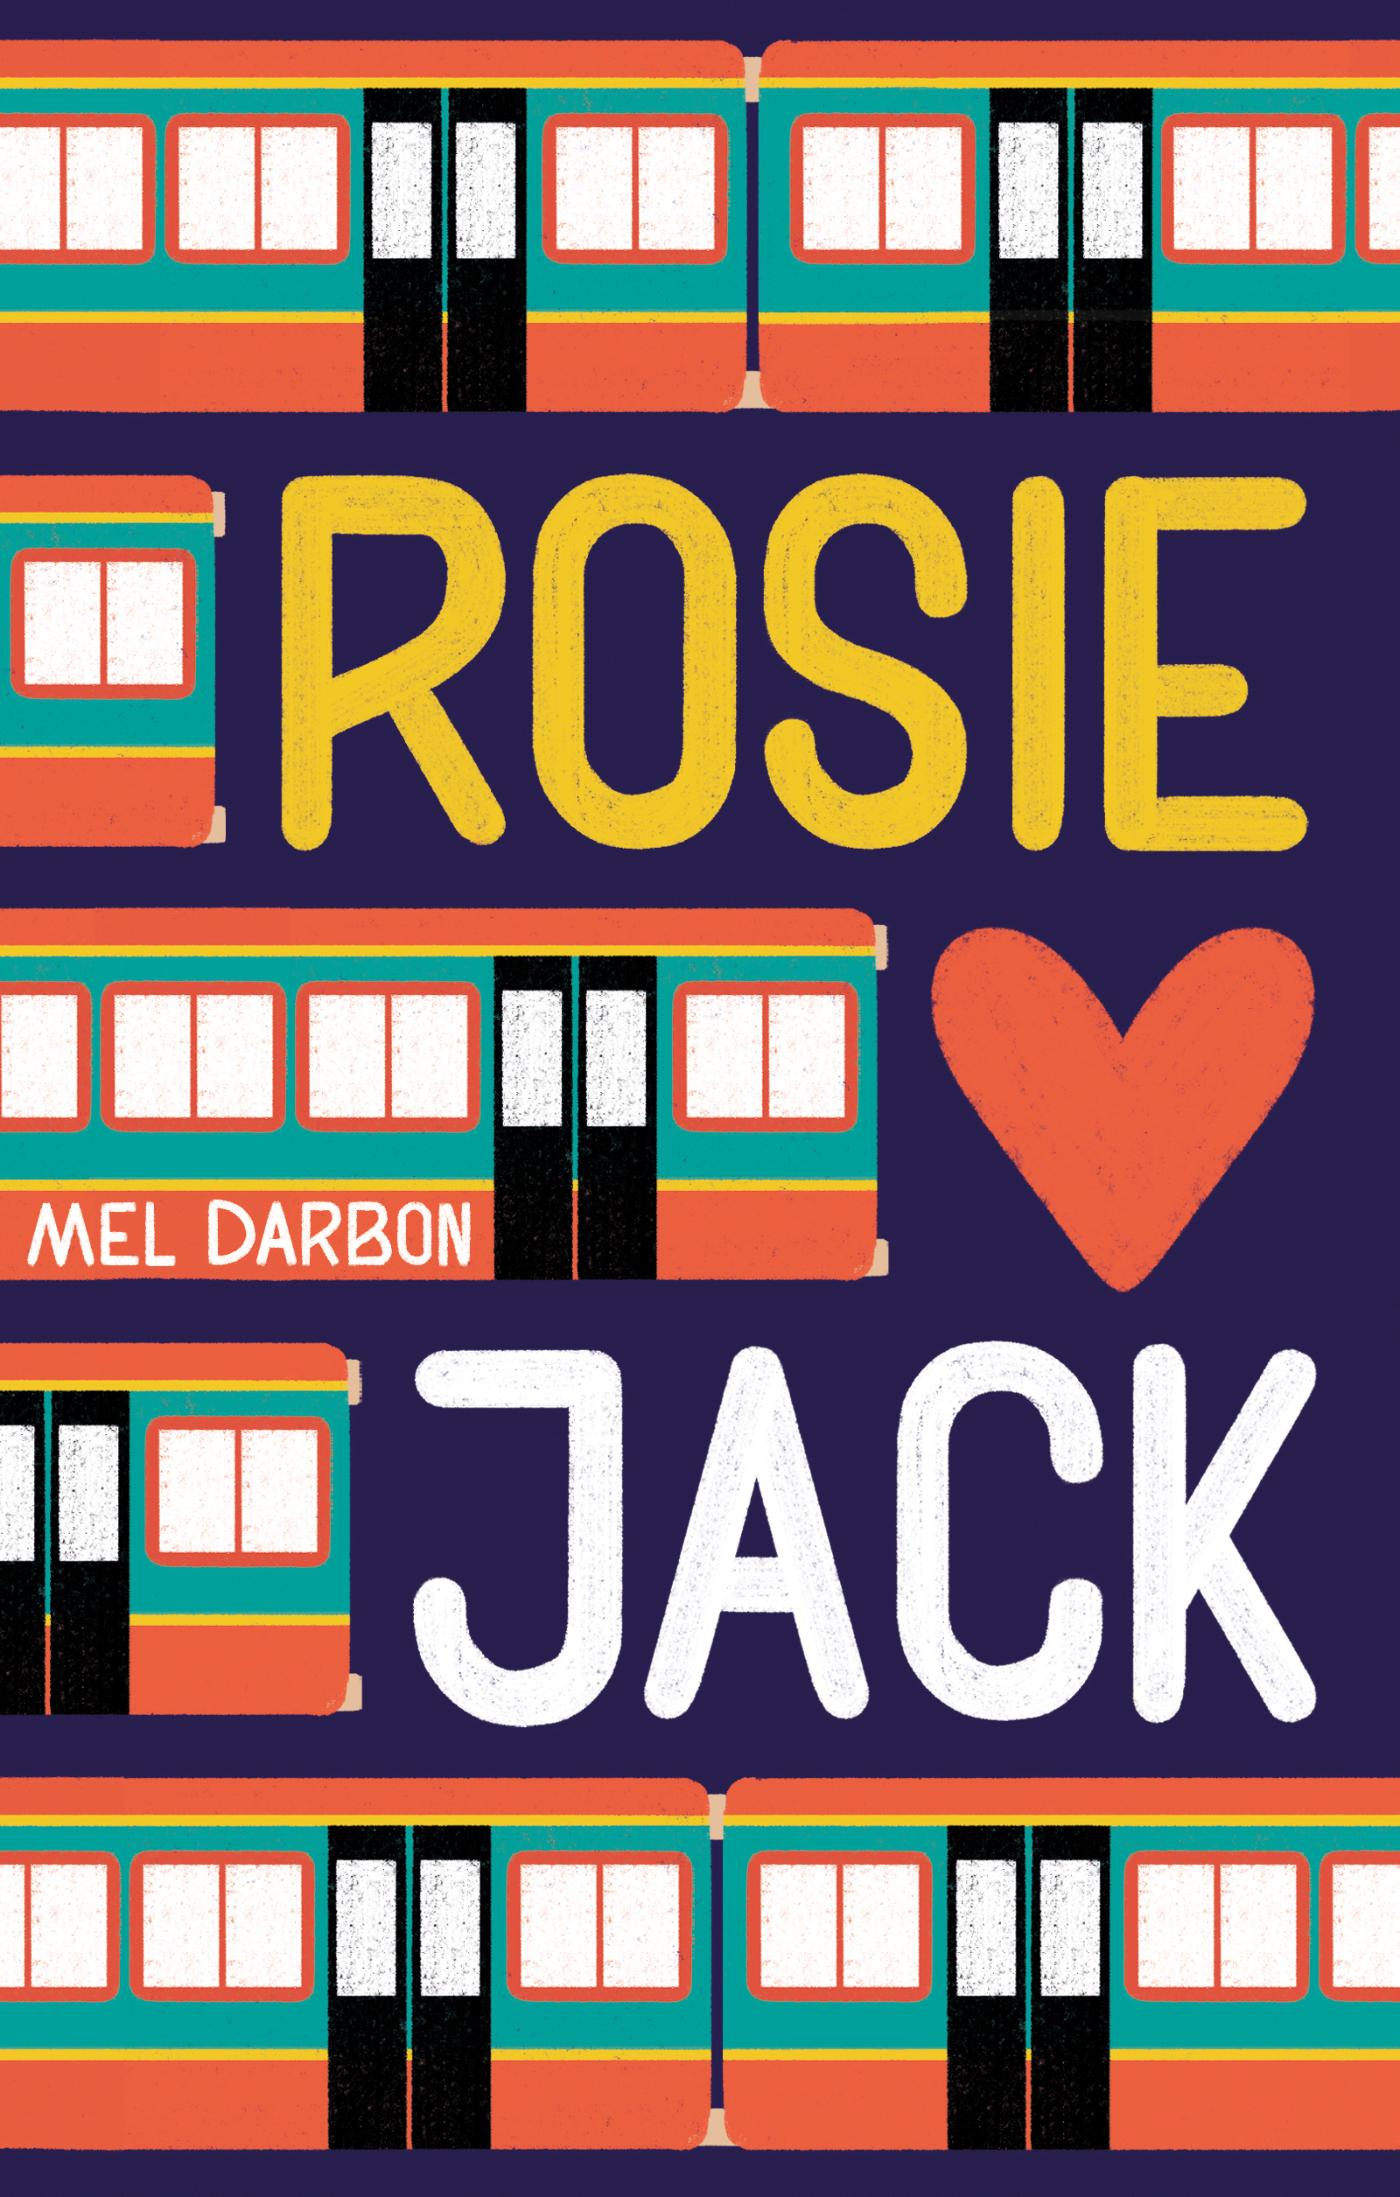 Rosie hartje Jack (Ebook)